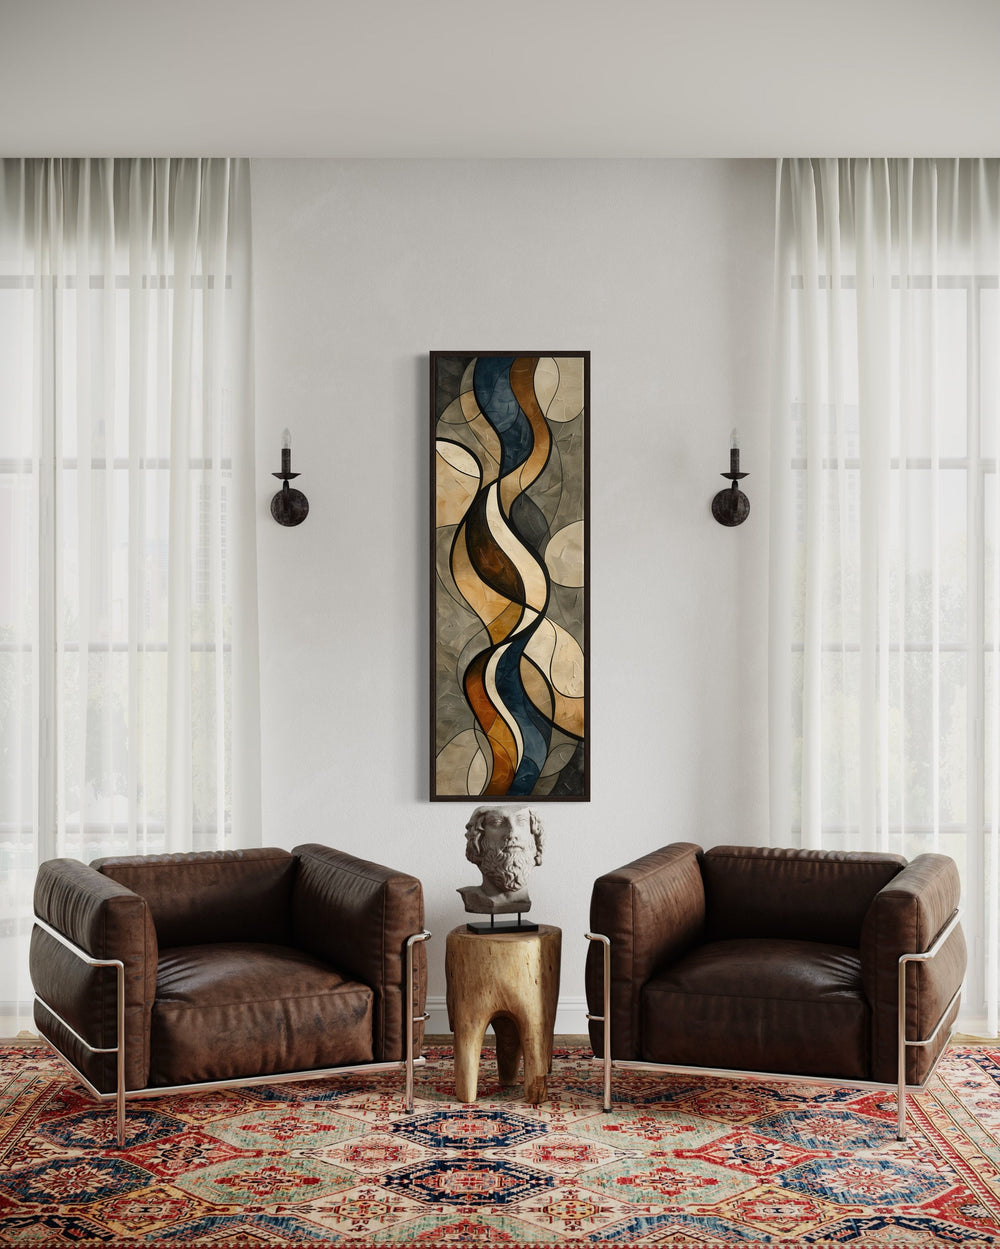 Tall Narrow Earth Tones Mid Century Modern Framed Canvas Wall Art in living room